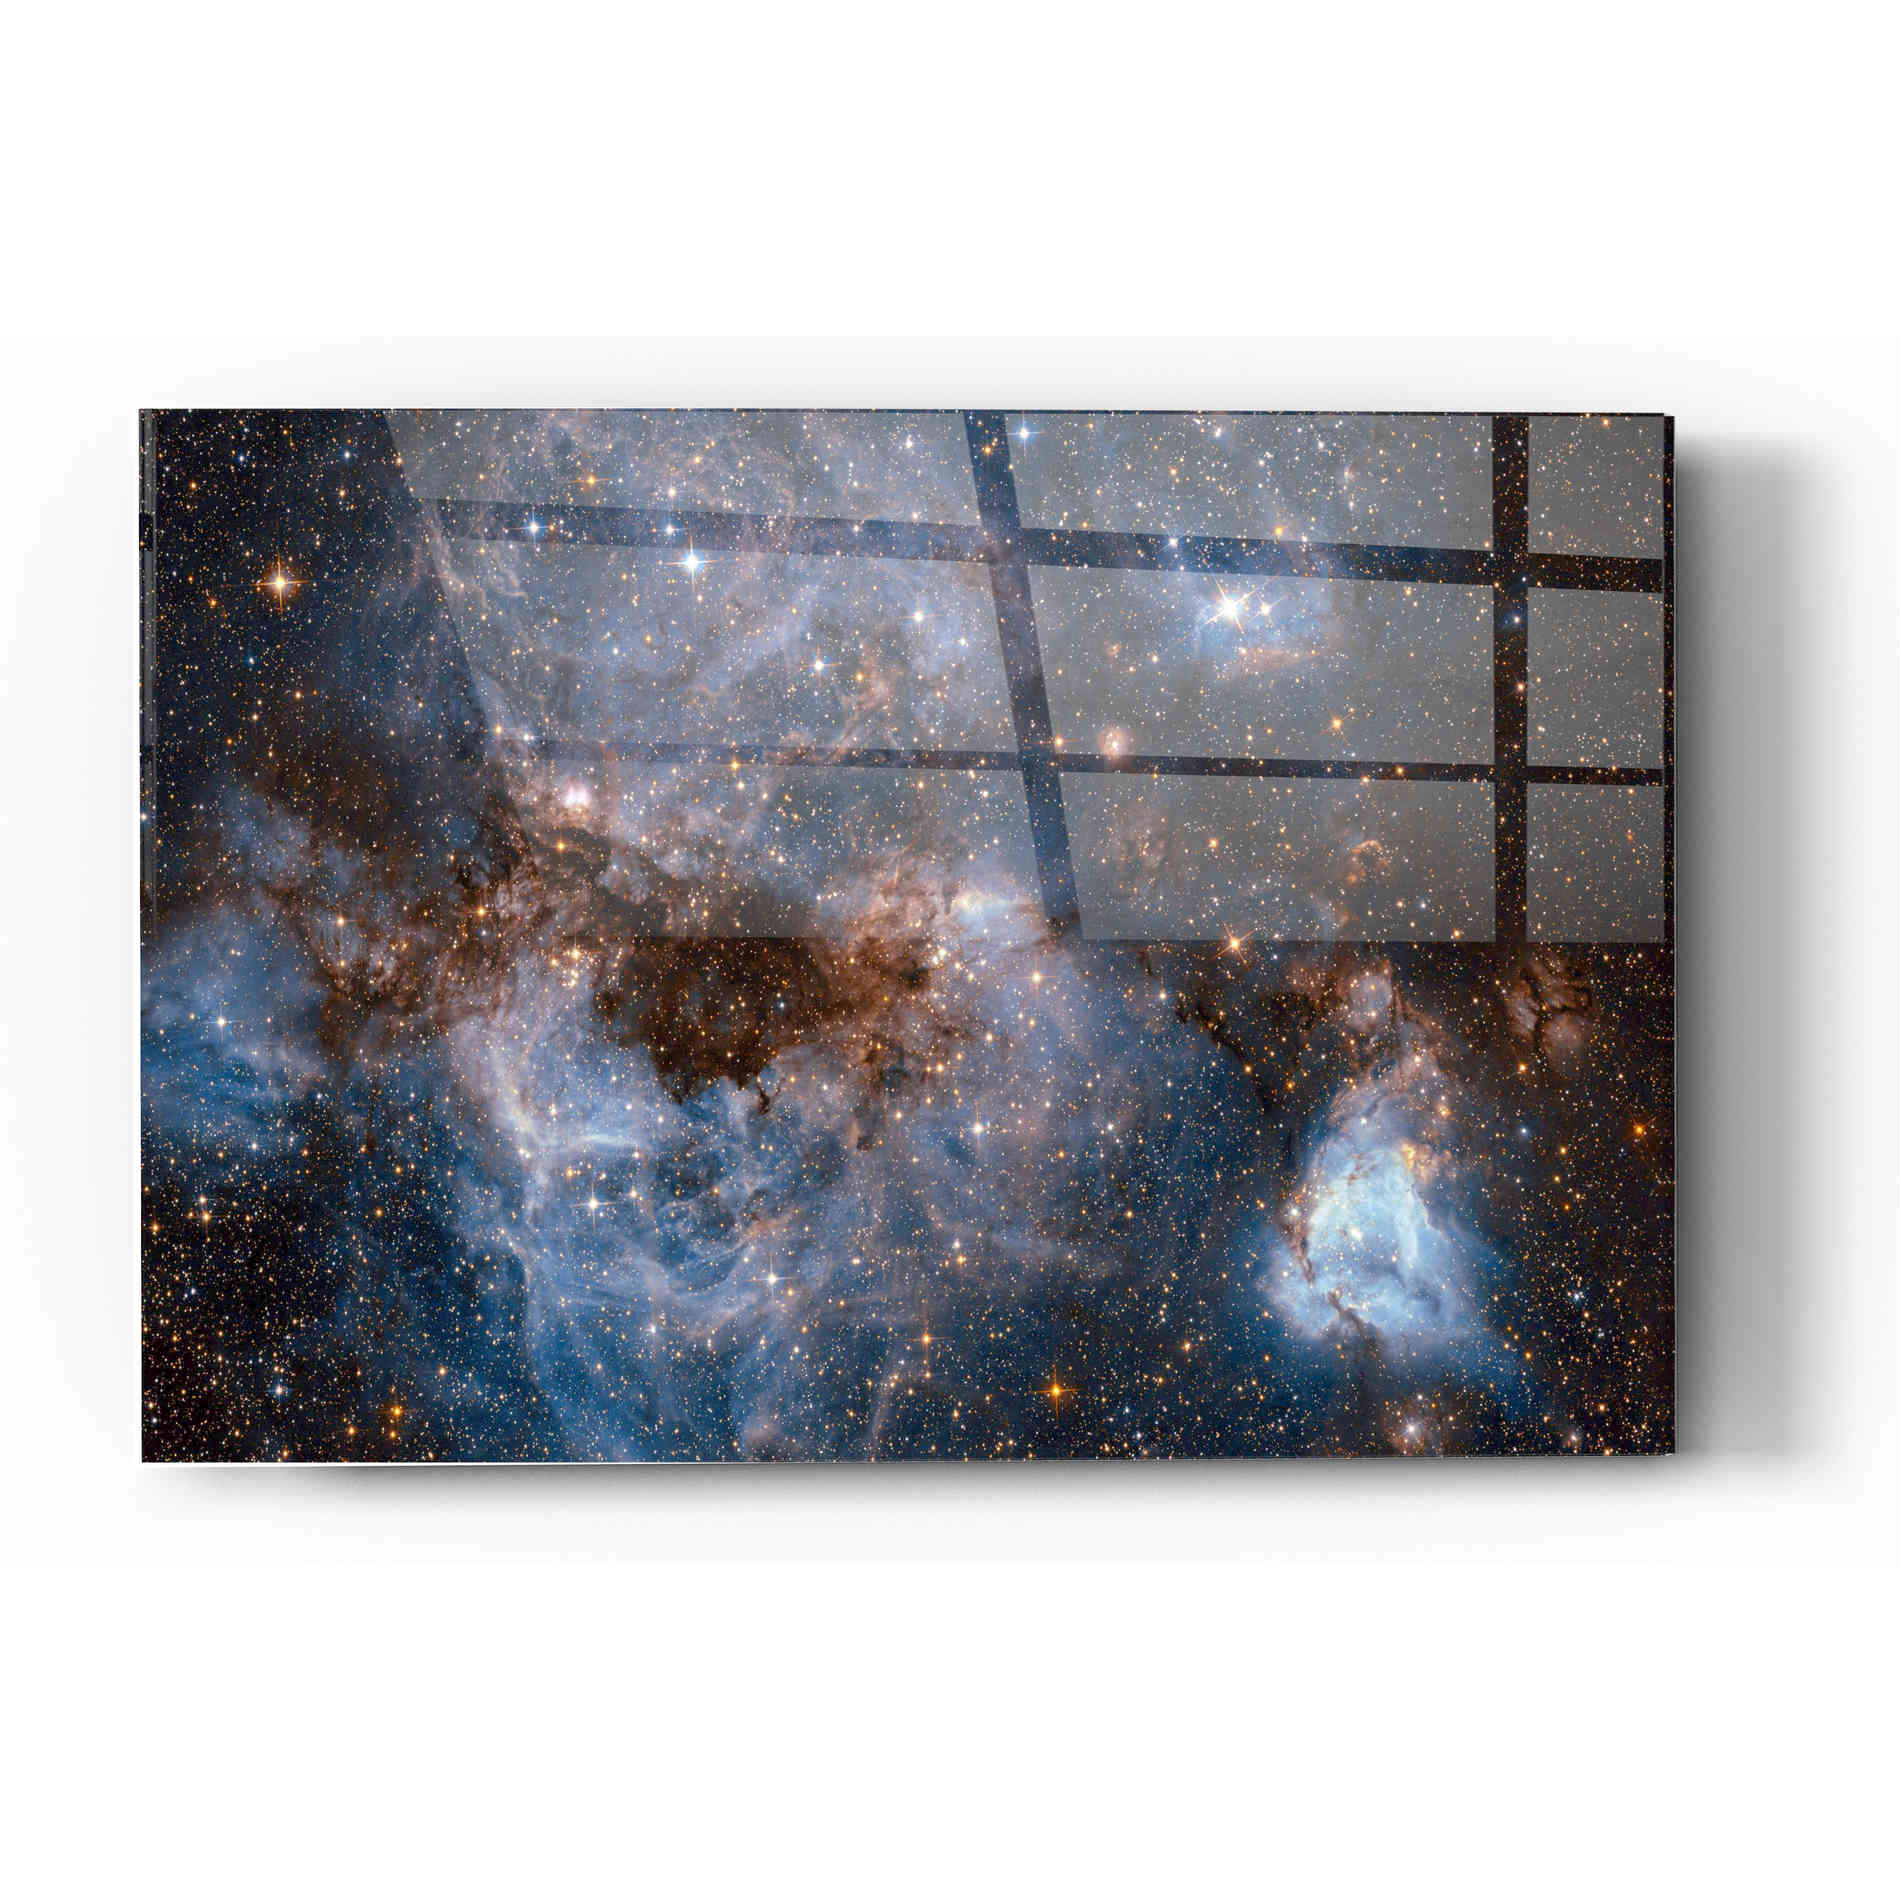 Epic Art 'Maelstrom Cloud' Hubble Space Telescope Acrylic Glass Wall Art,12x16